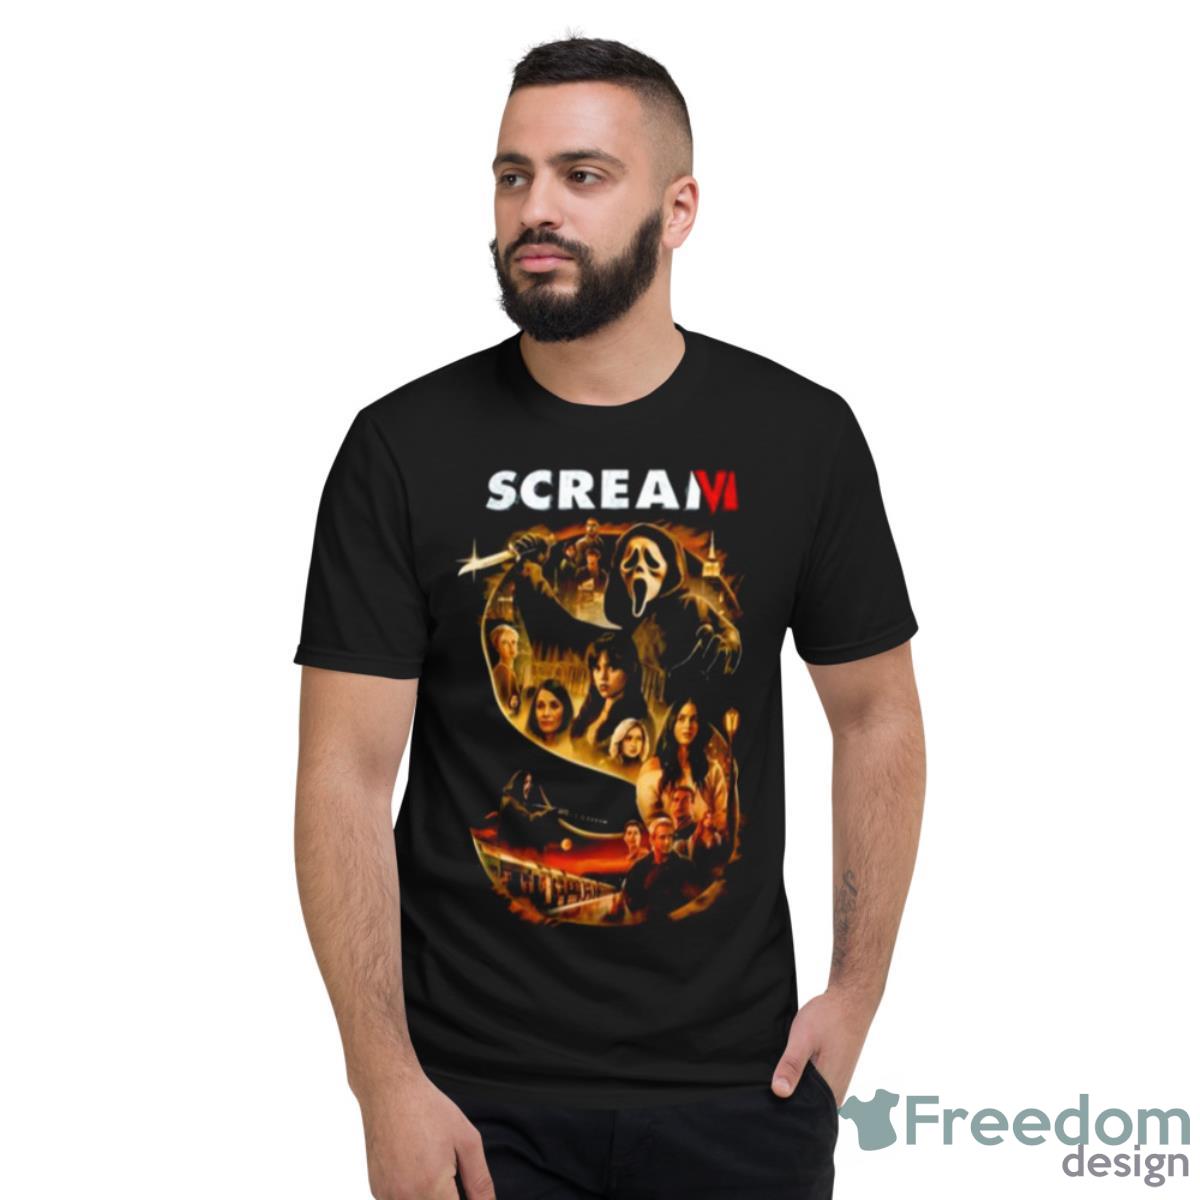 The S Aesthetic Art Scream 6 Shirt